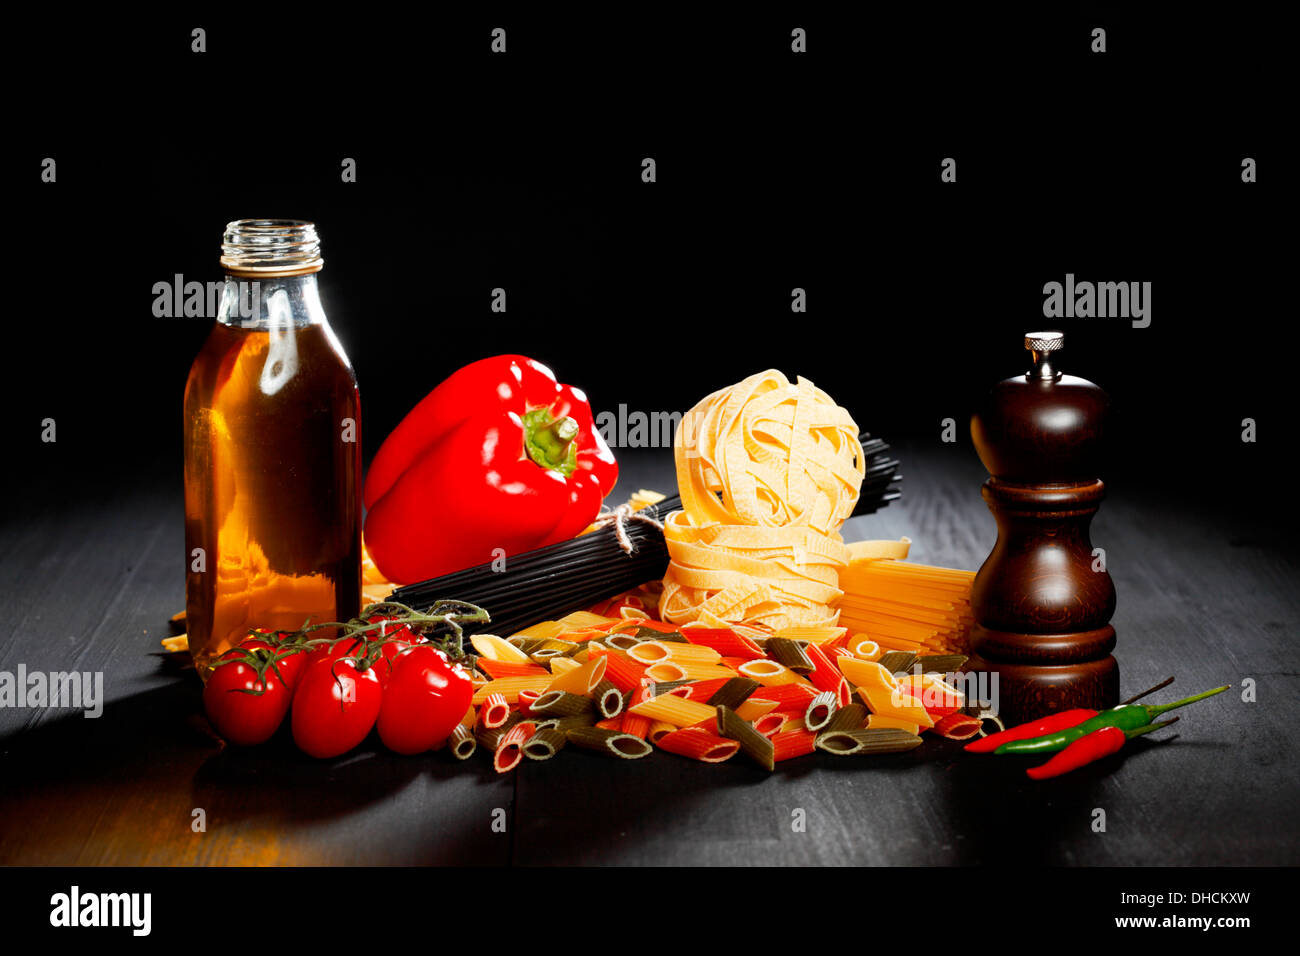 Pasta ingredients on black table, italian cuisine concept Stock Photo